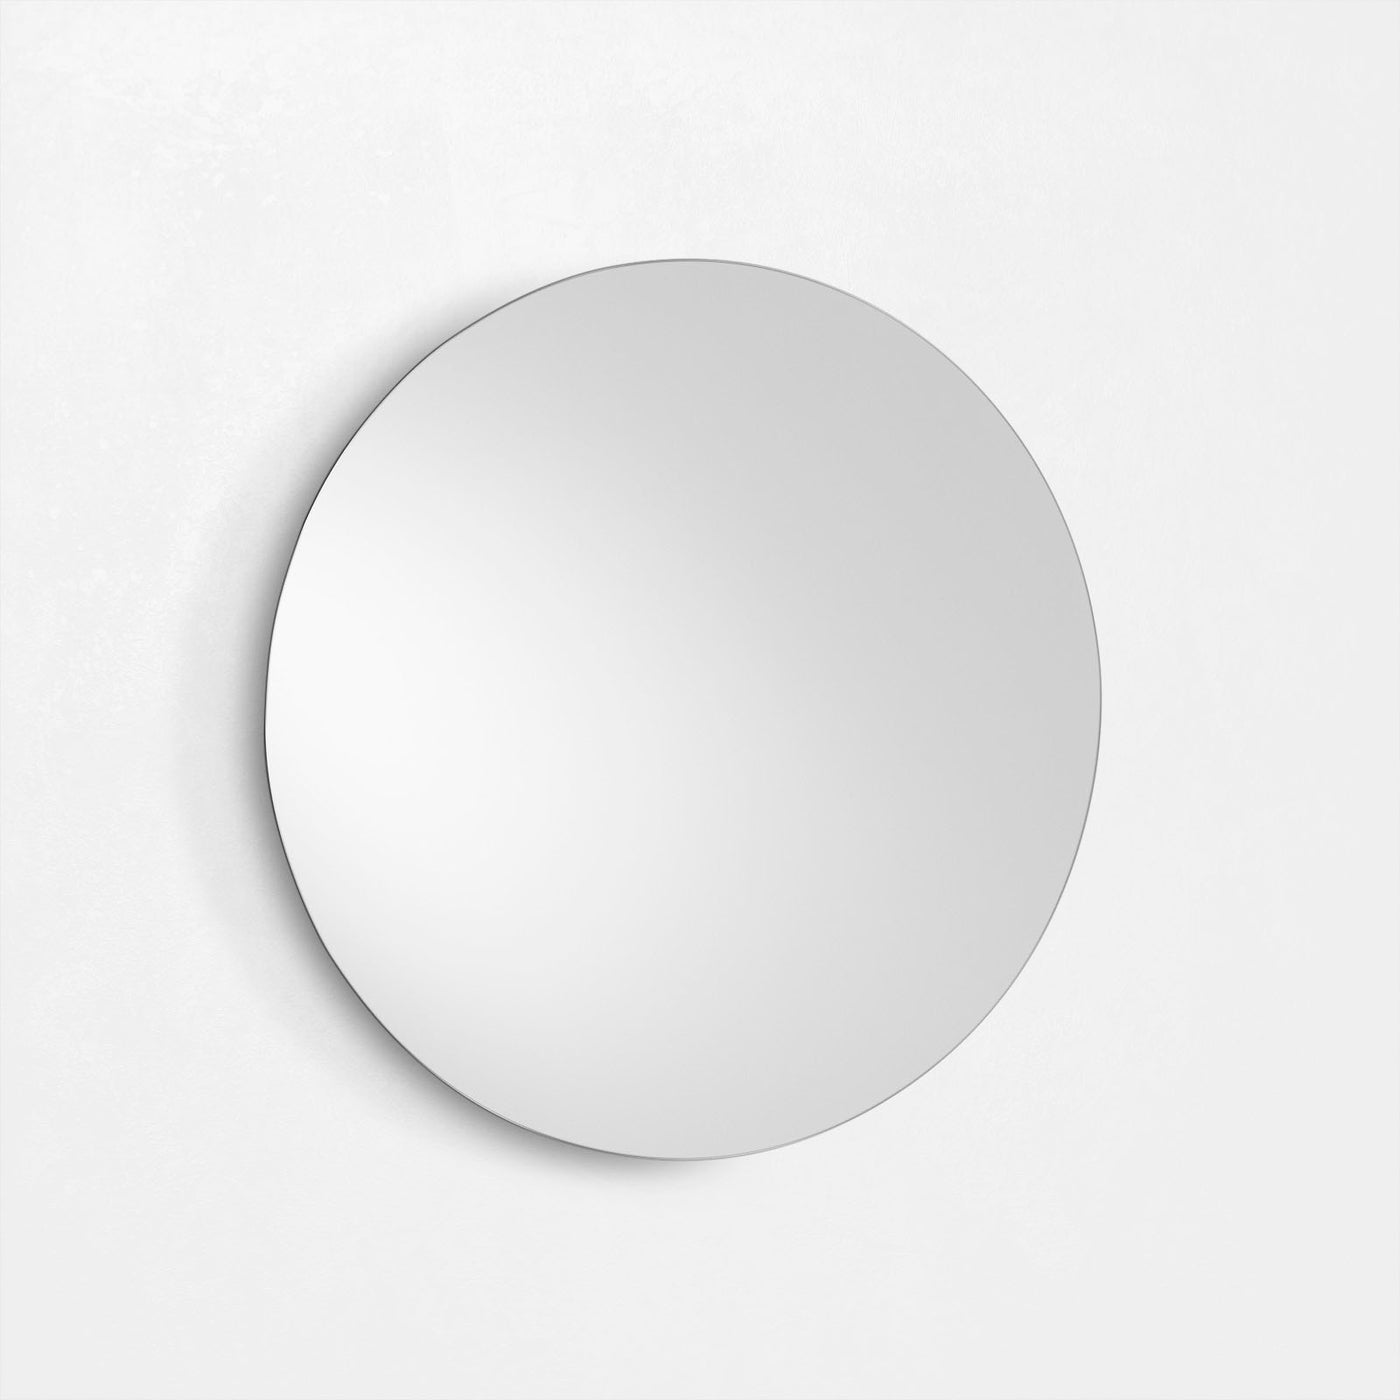 CIRCLE mirror